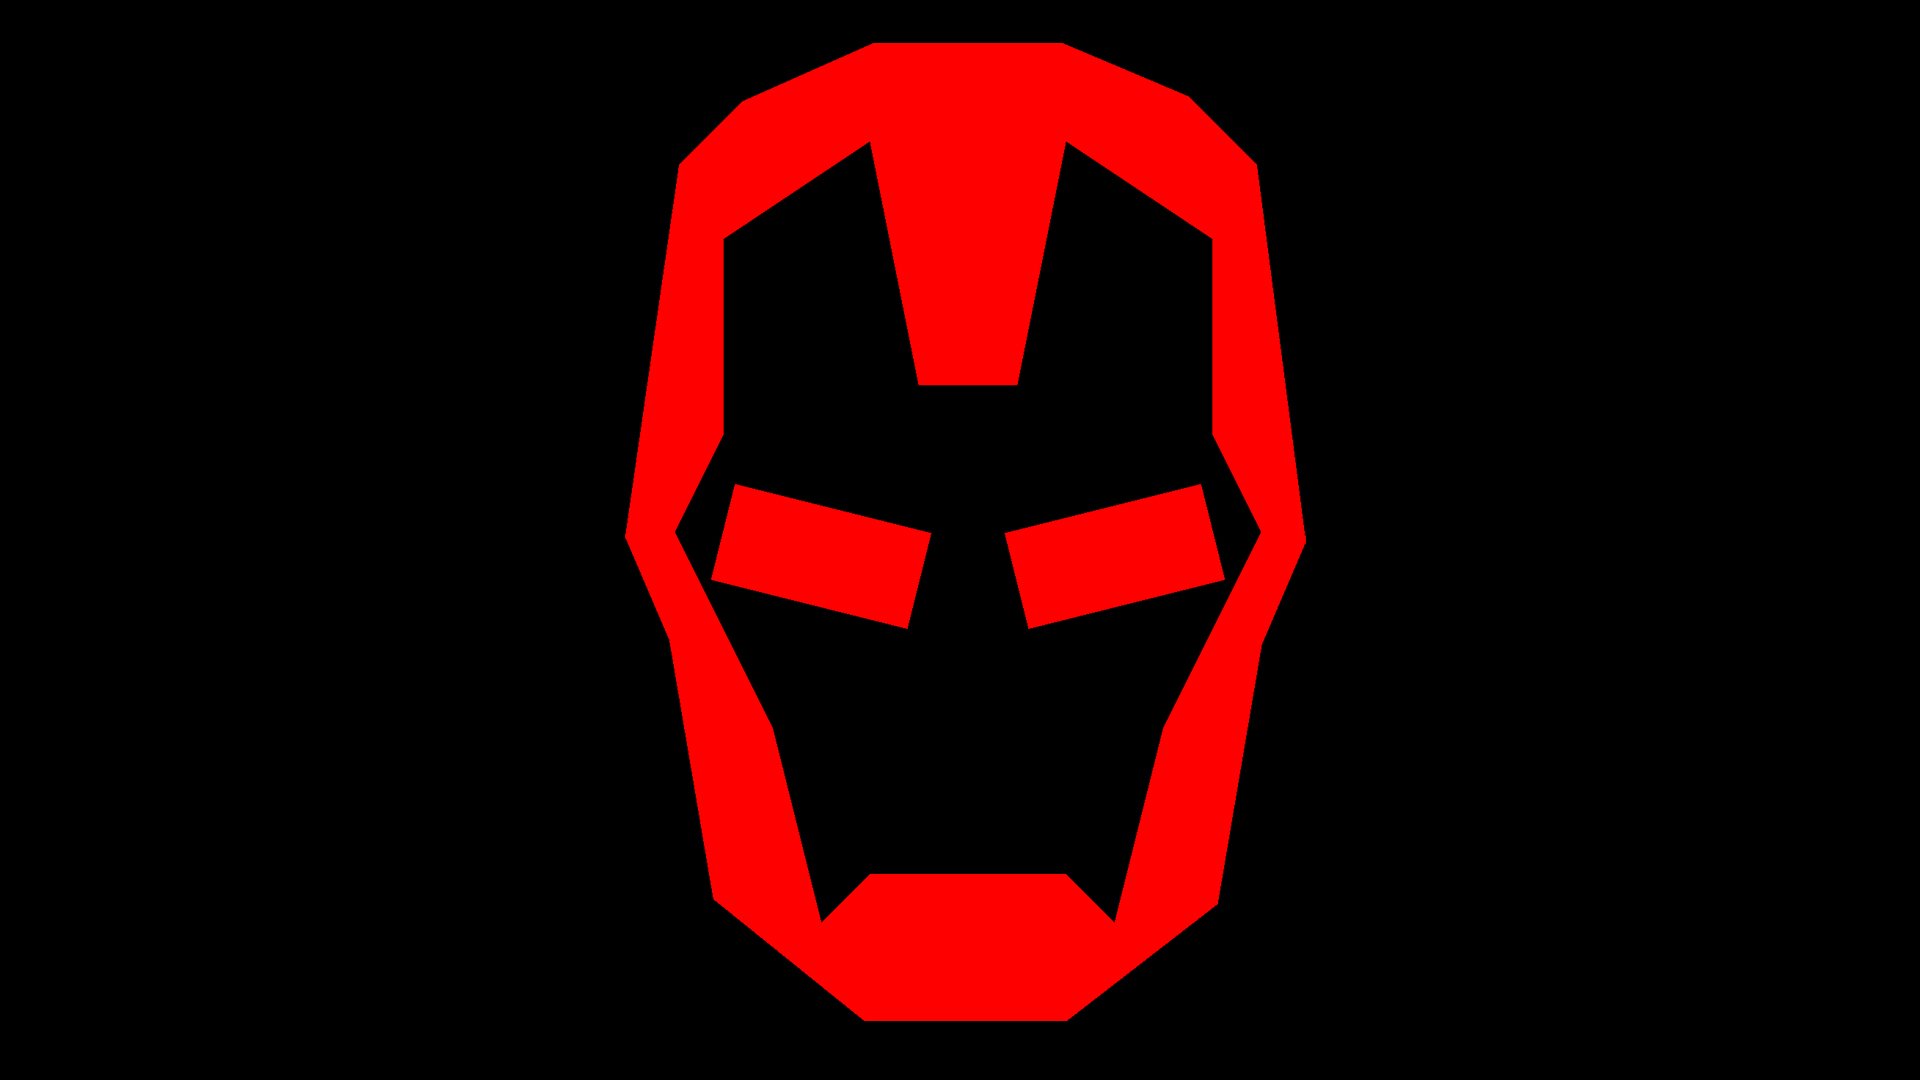 Superior Iron Man - Fan Logo by WesleyVianen on DeviantArt